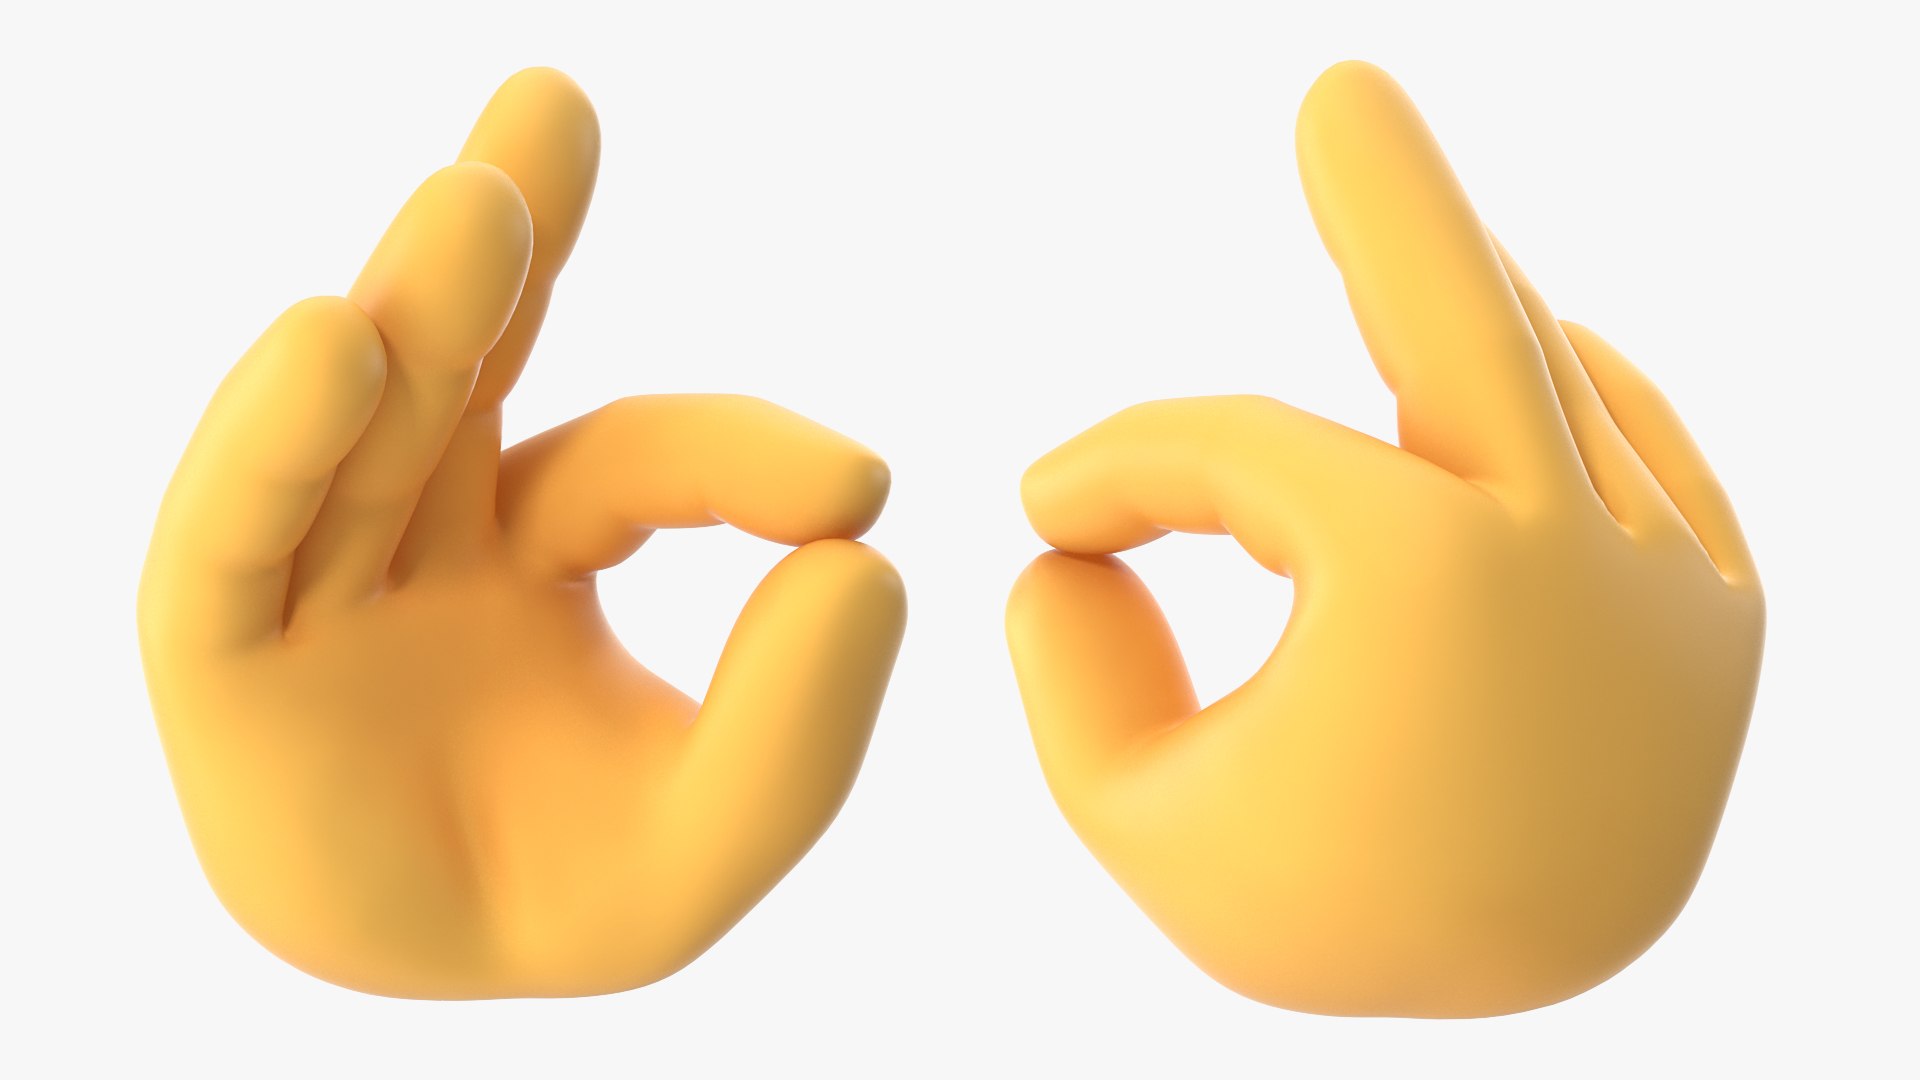 okay hand emoji